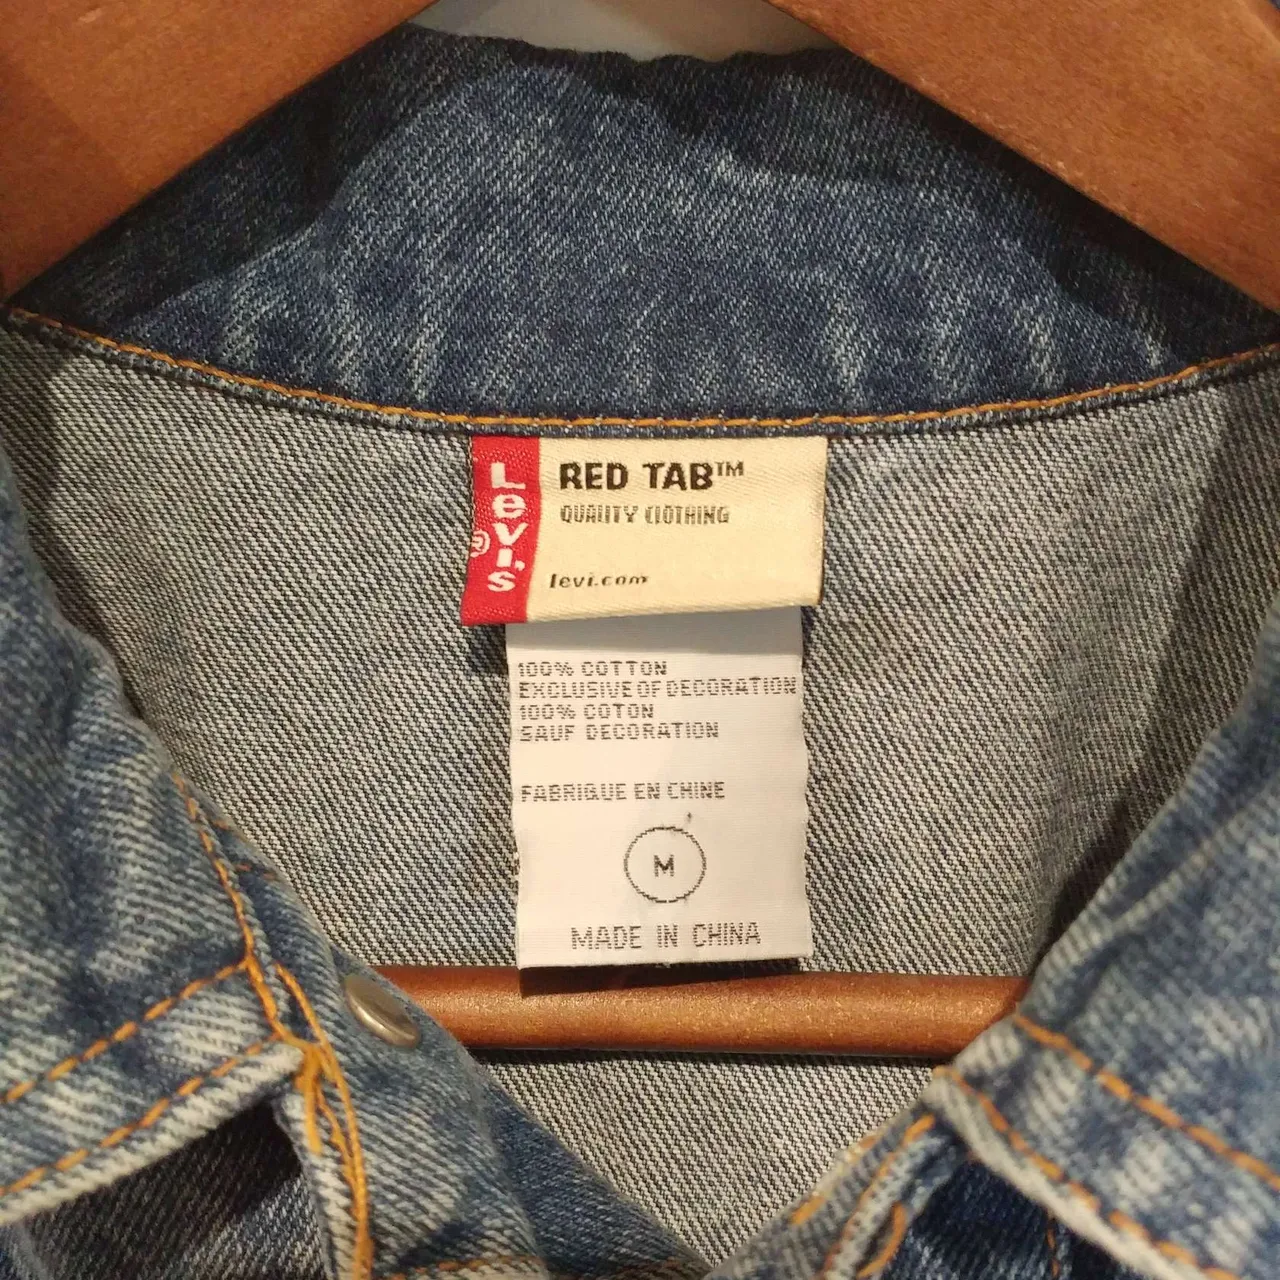 Levis red tab Jean (denim) jacket - M photo 4